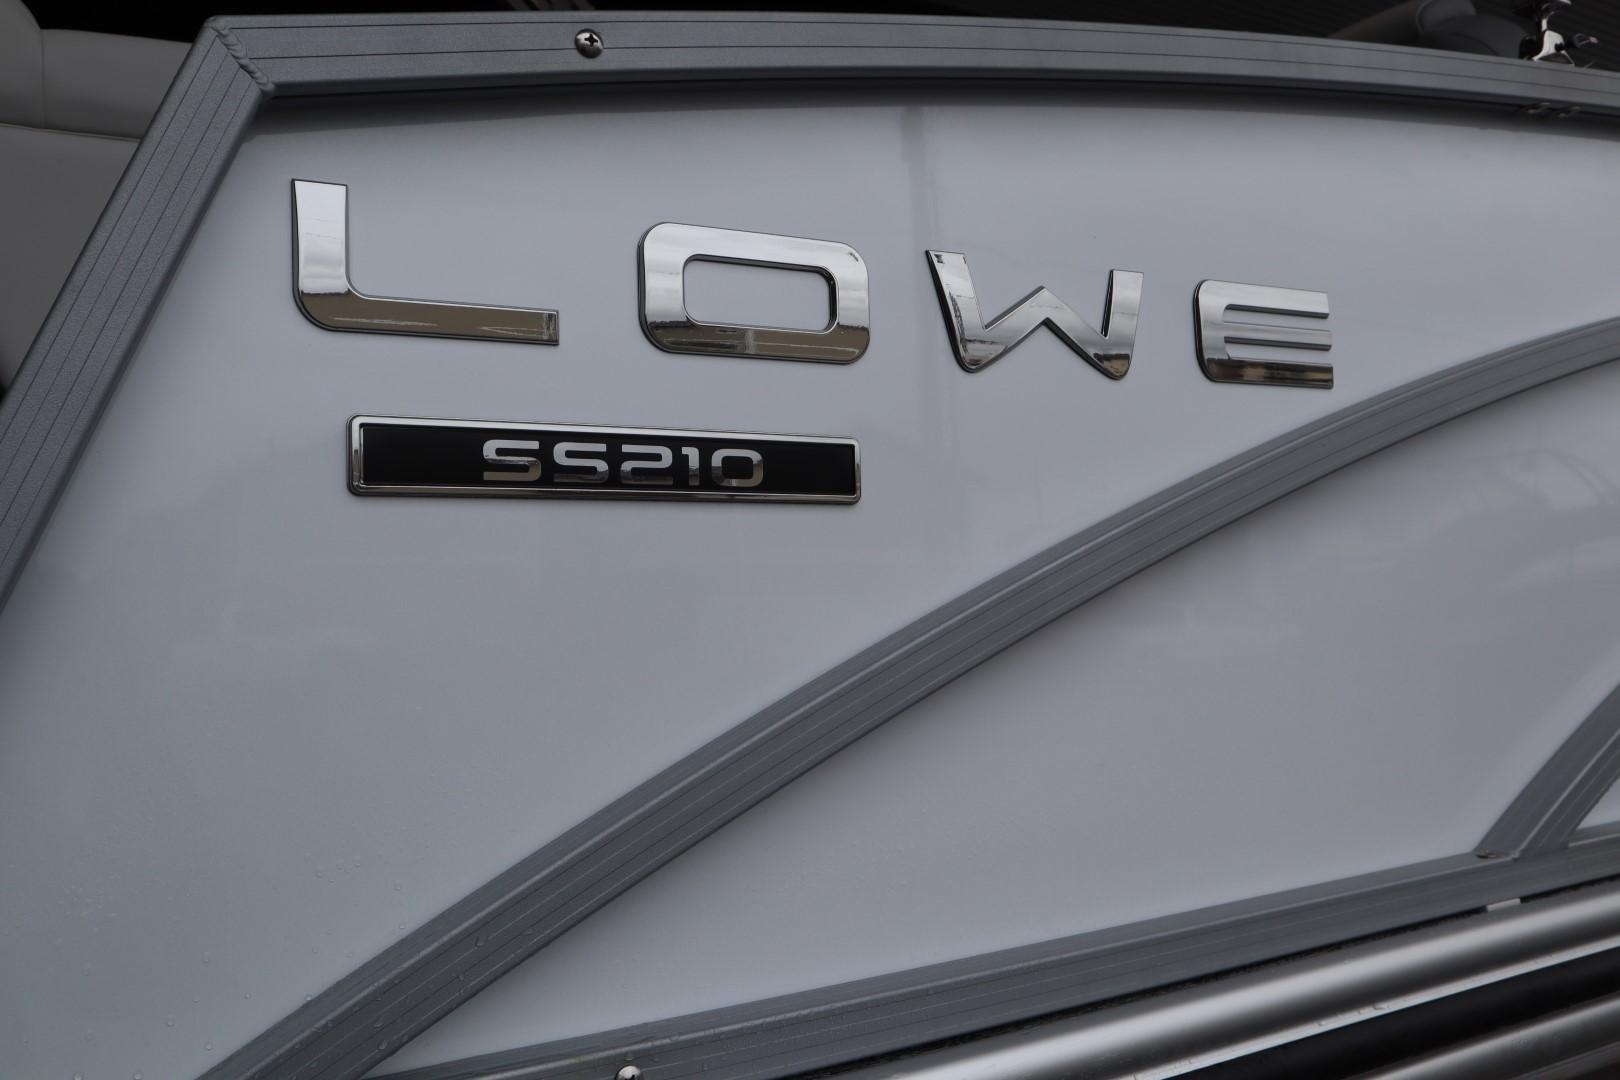 2024 Lowe Ss 210